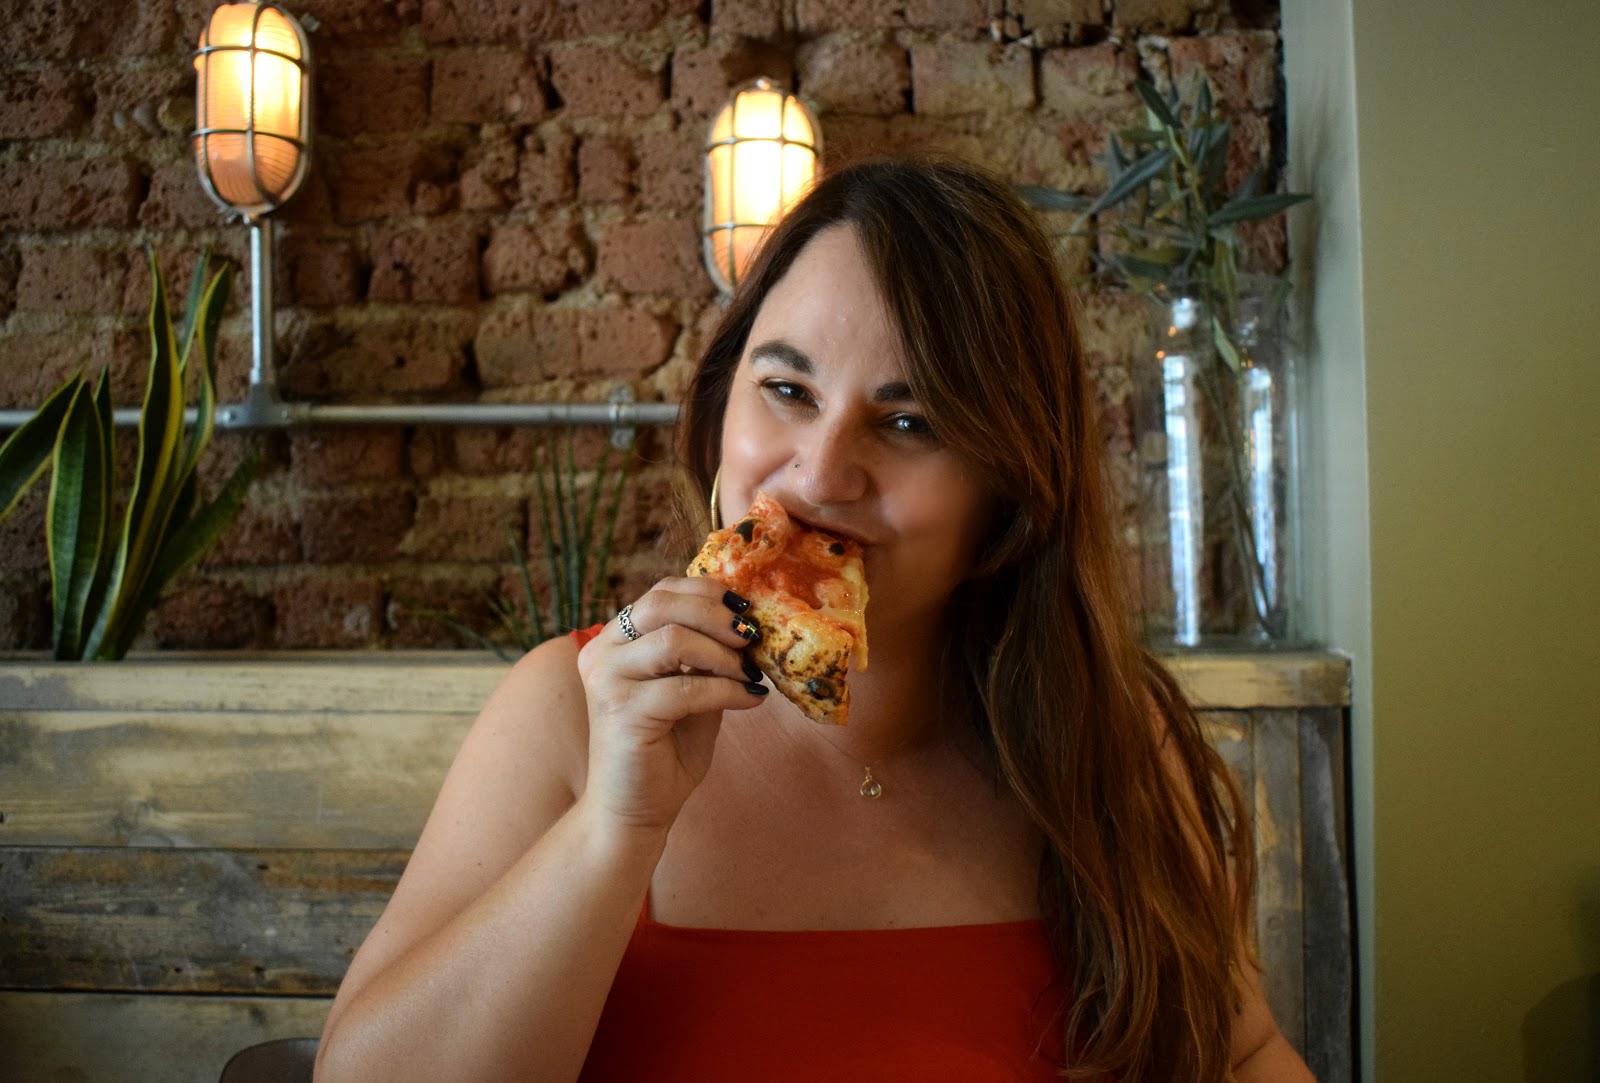 Purezza camden vegan pizza review